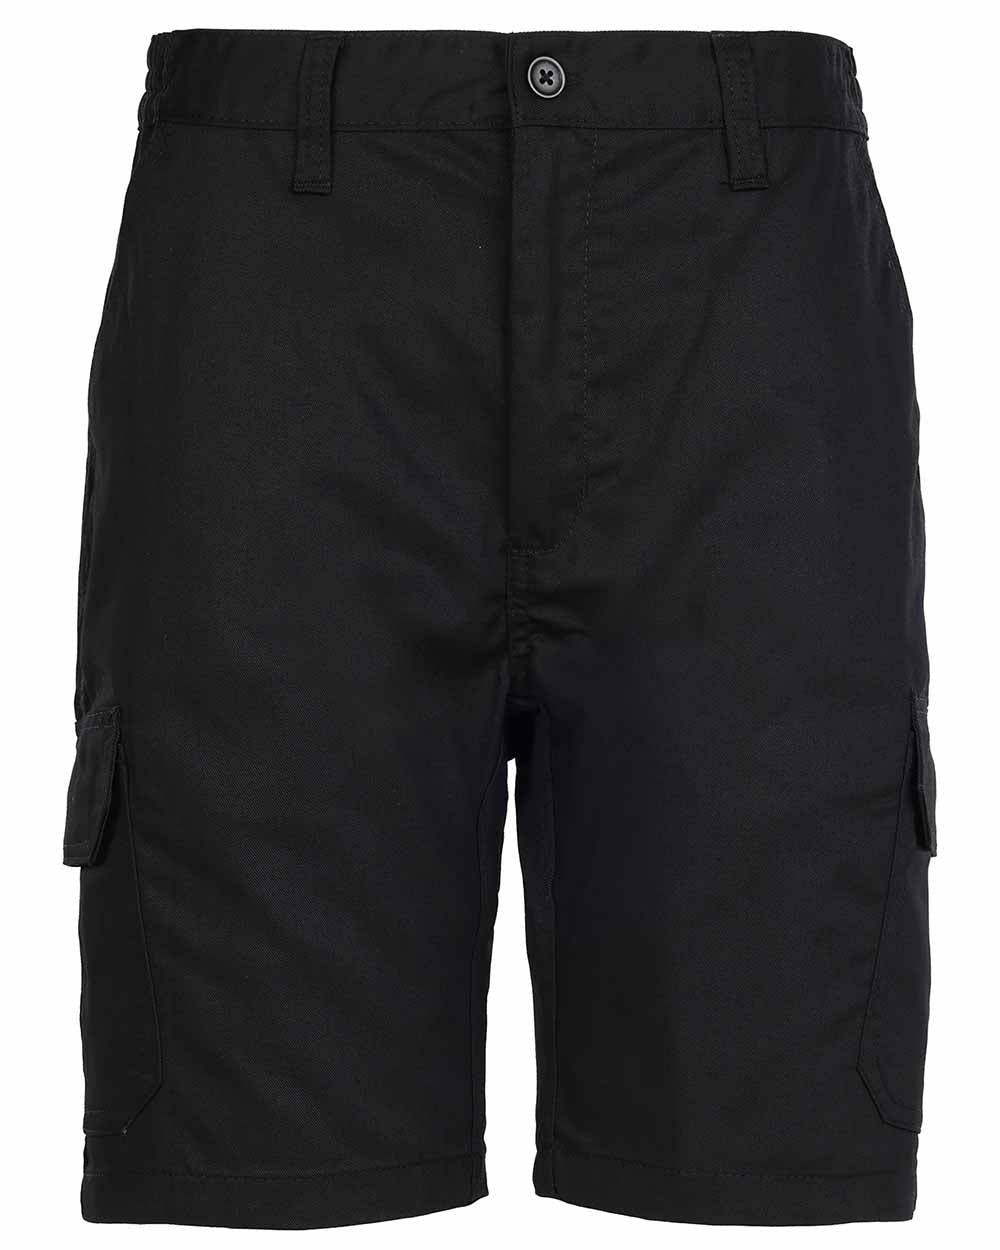 Fort Workforce Shorts in Black 